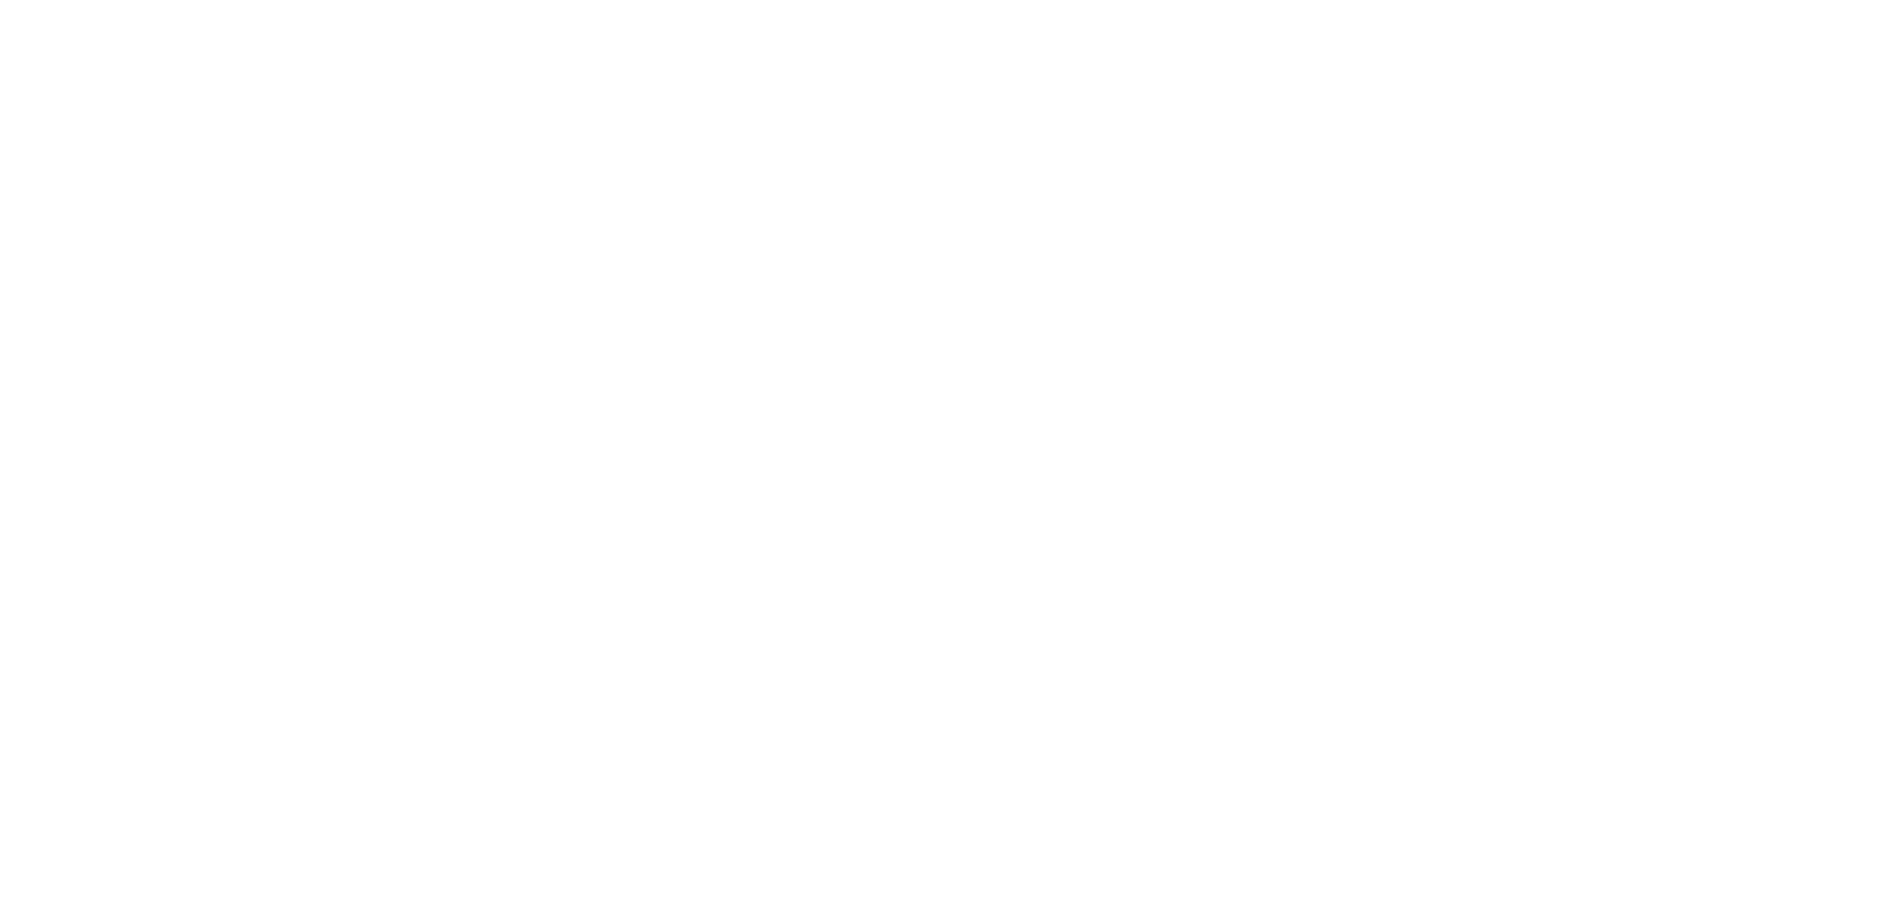 CAE logo in white